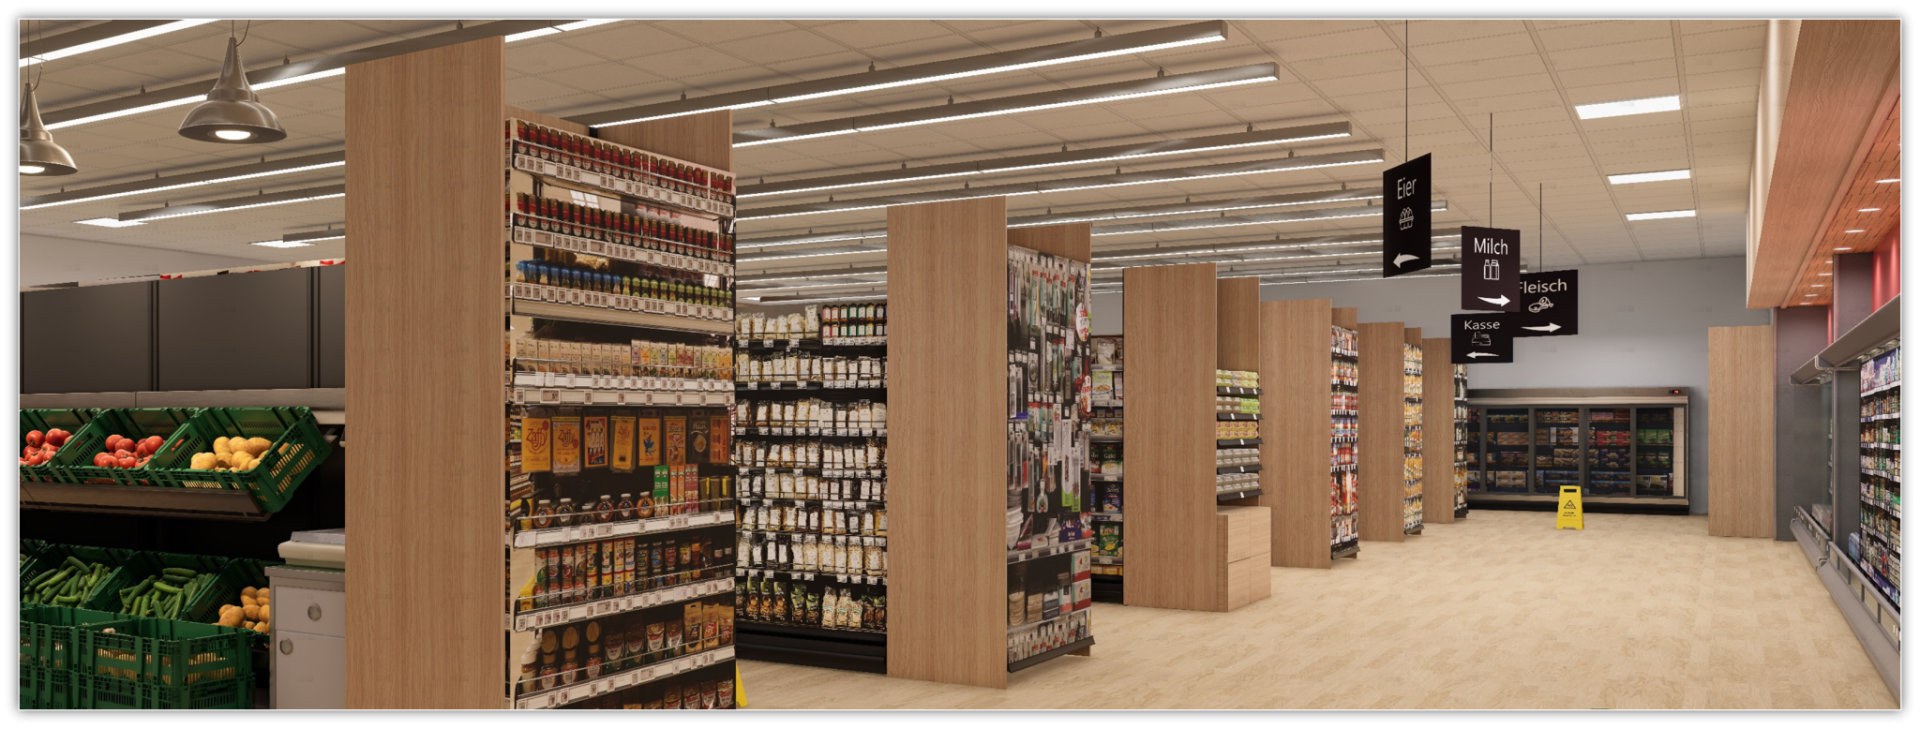 The virtual supermarket